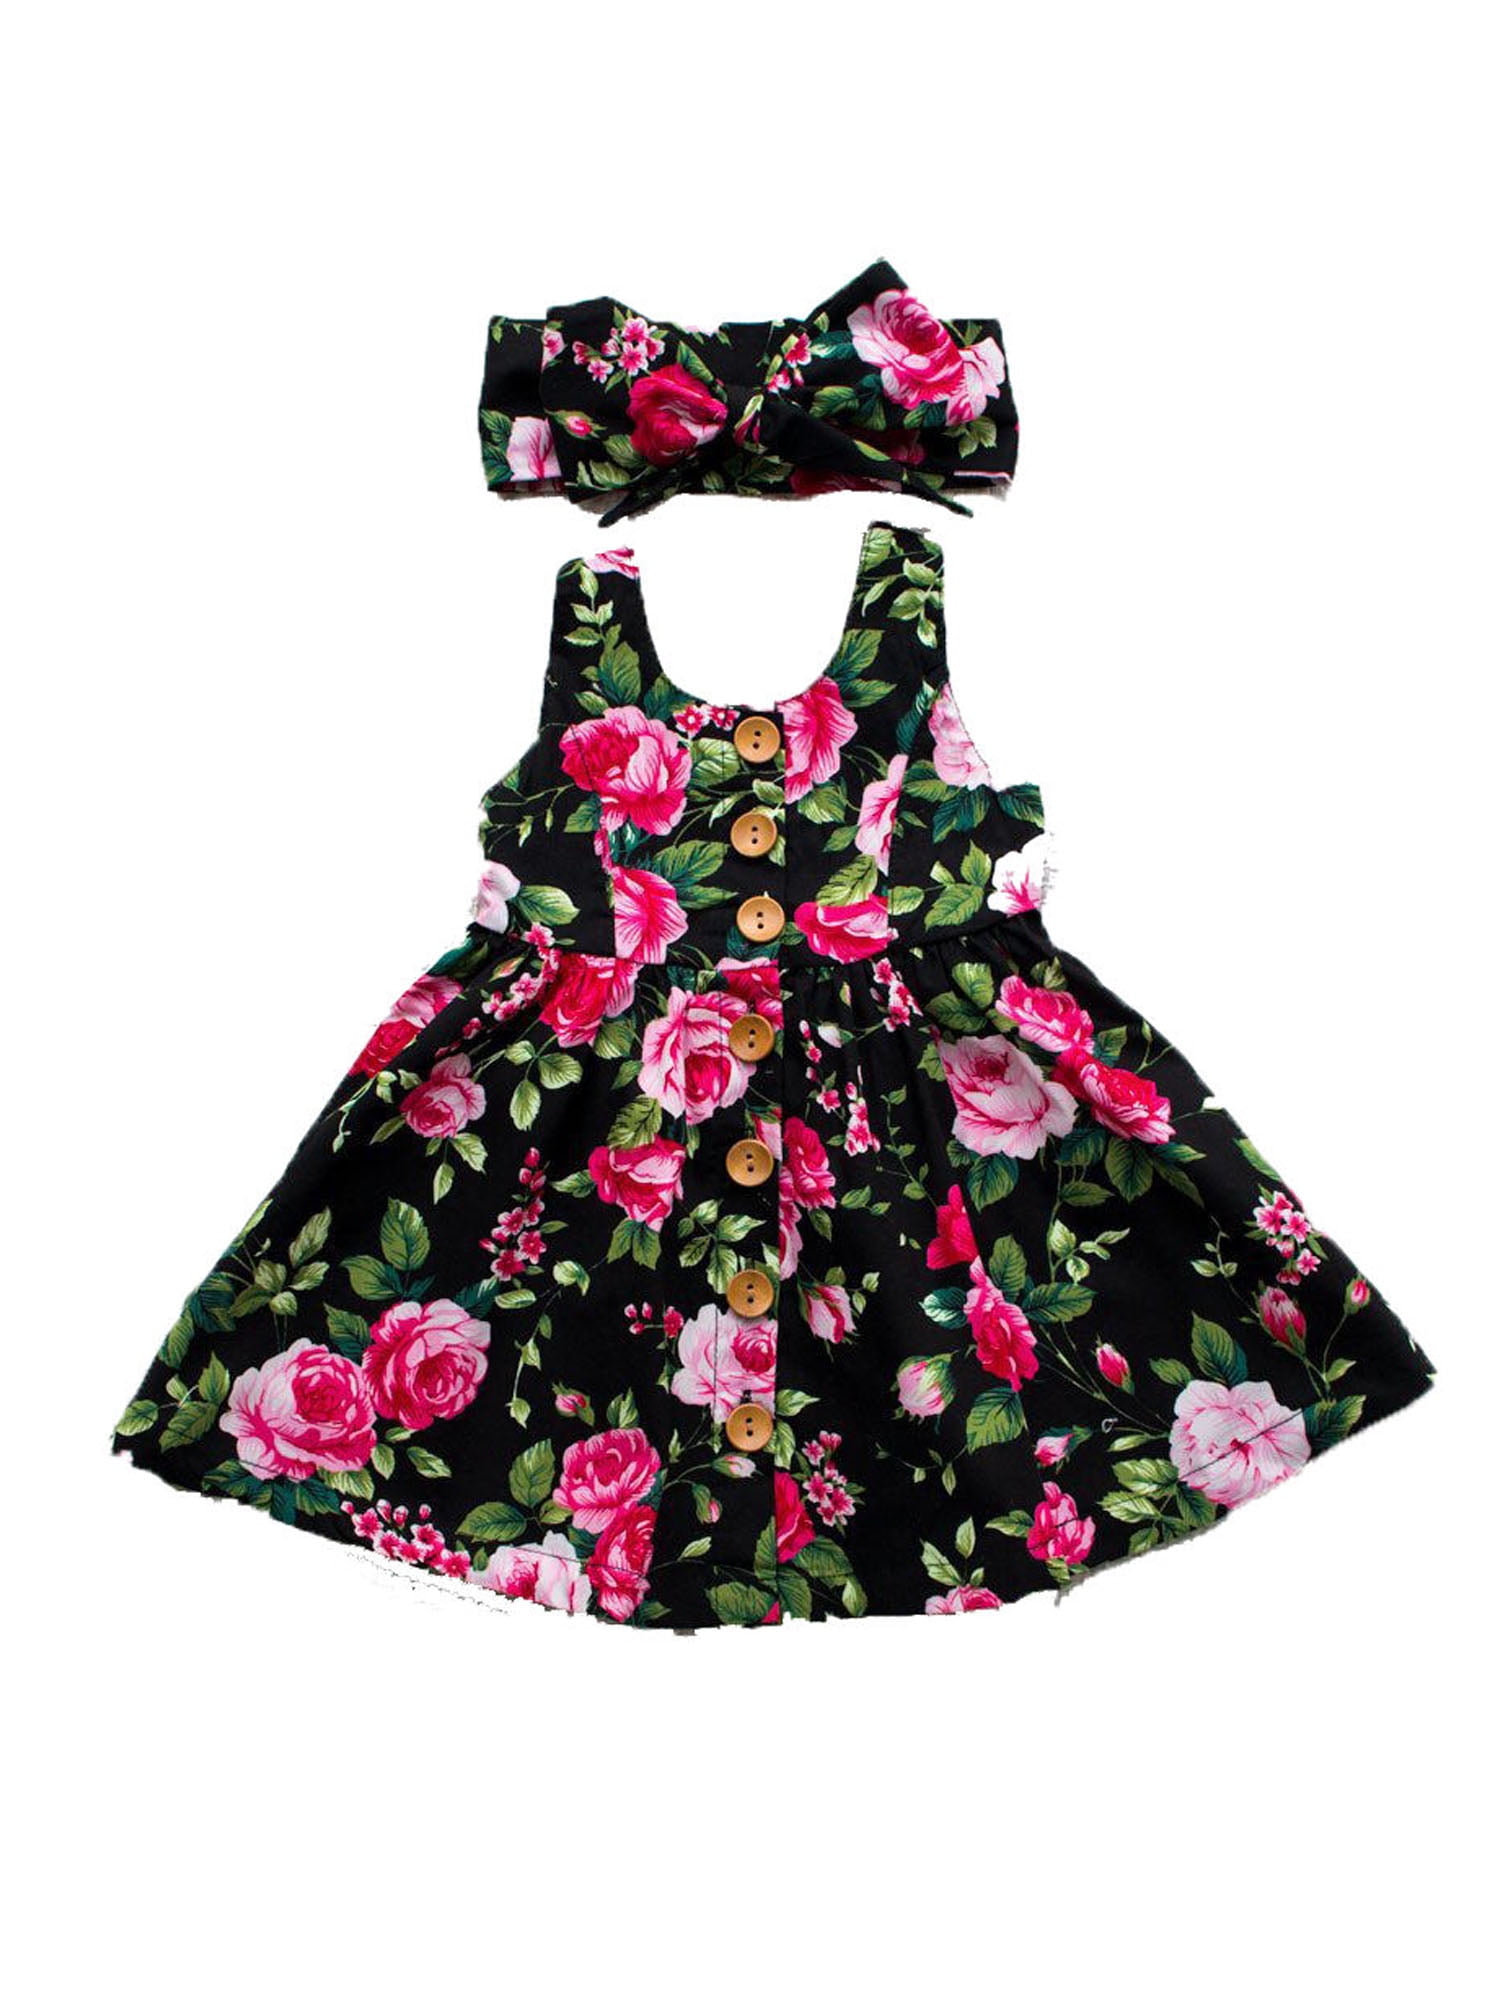 US Toddler Kids Baby Girls Flower Summer Party Dress Sundress Clothes 0-4T Mon 